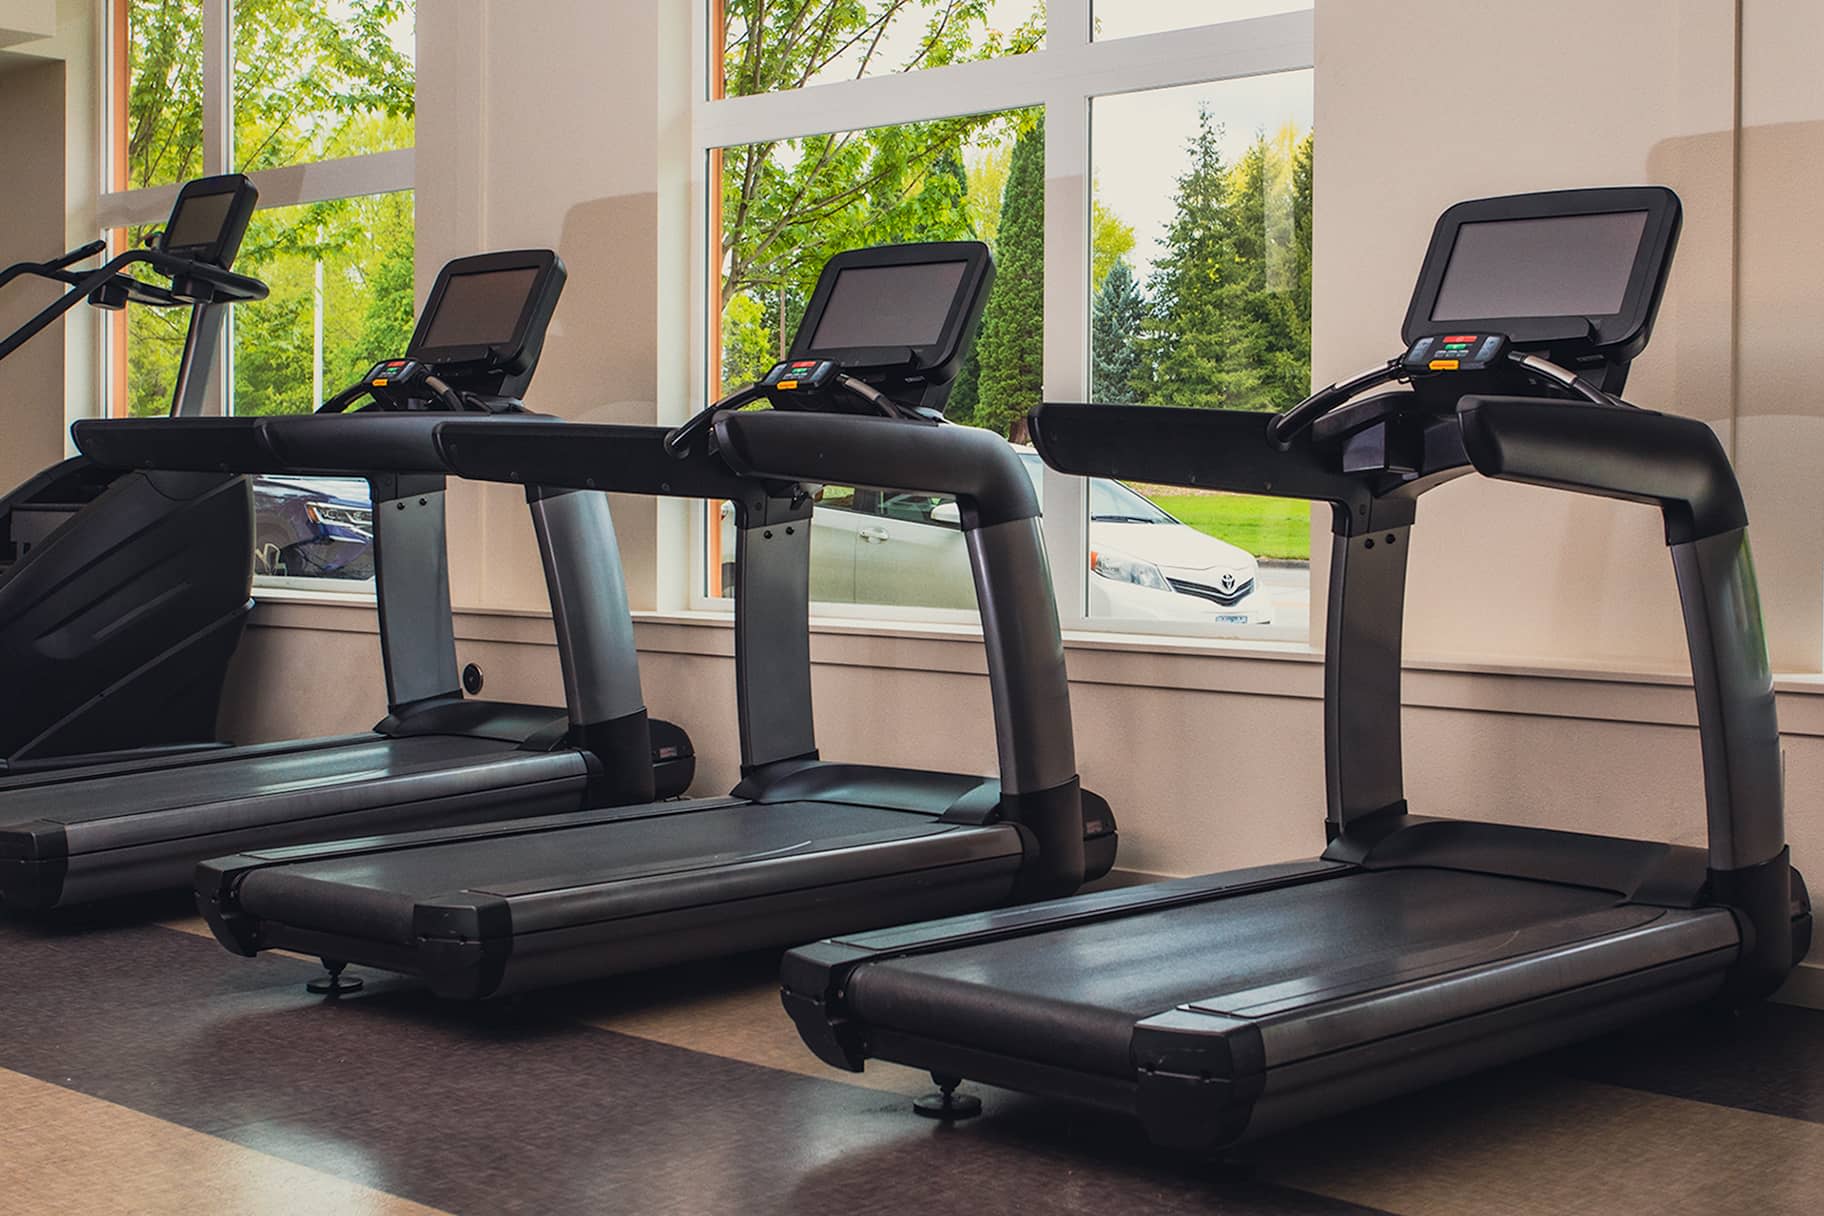 How Long Should You Run On A Treadmill?